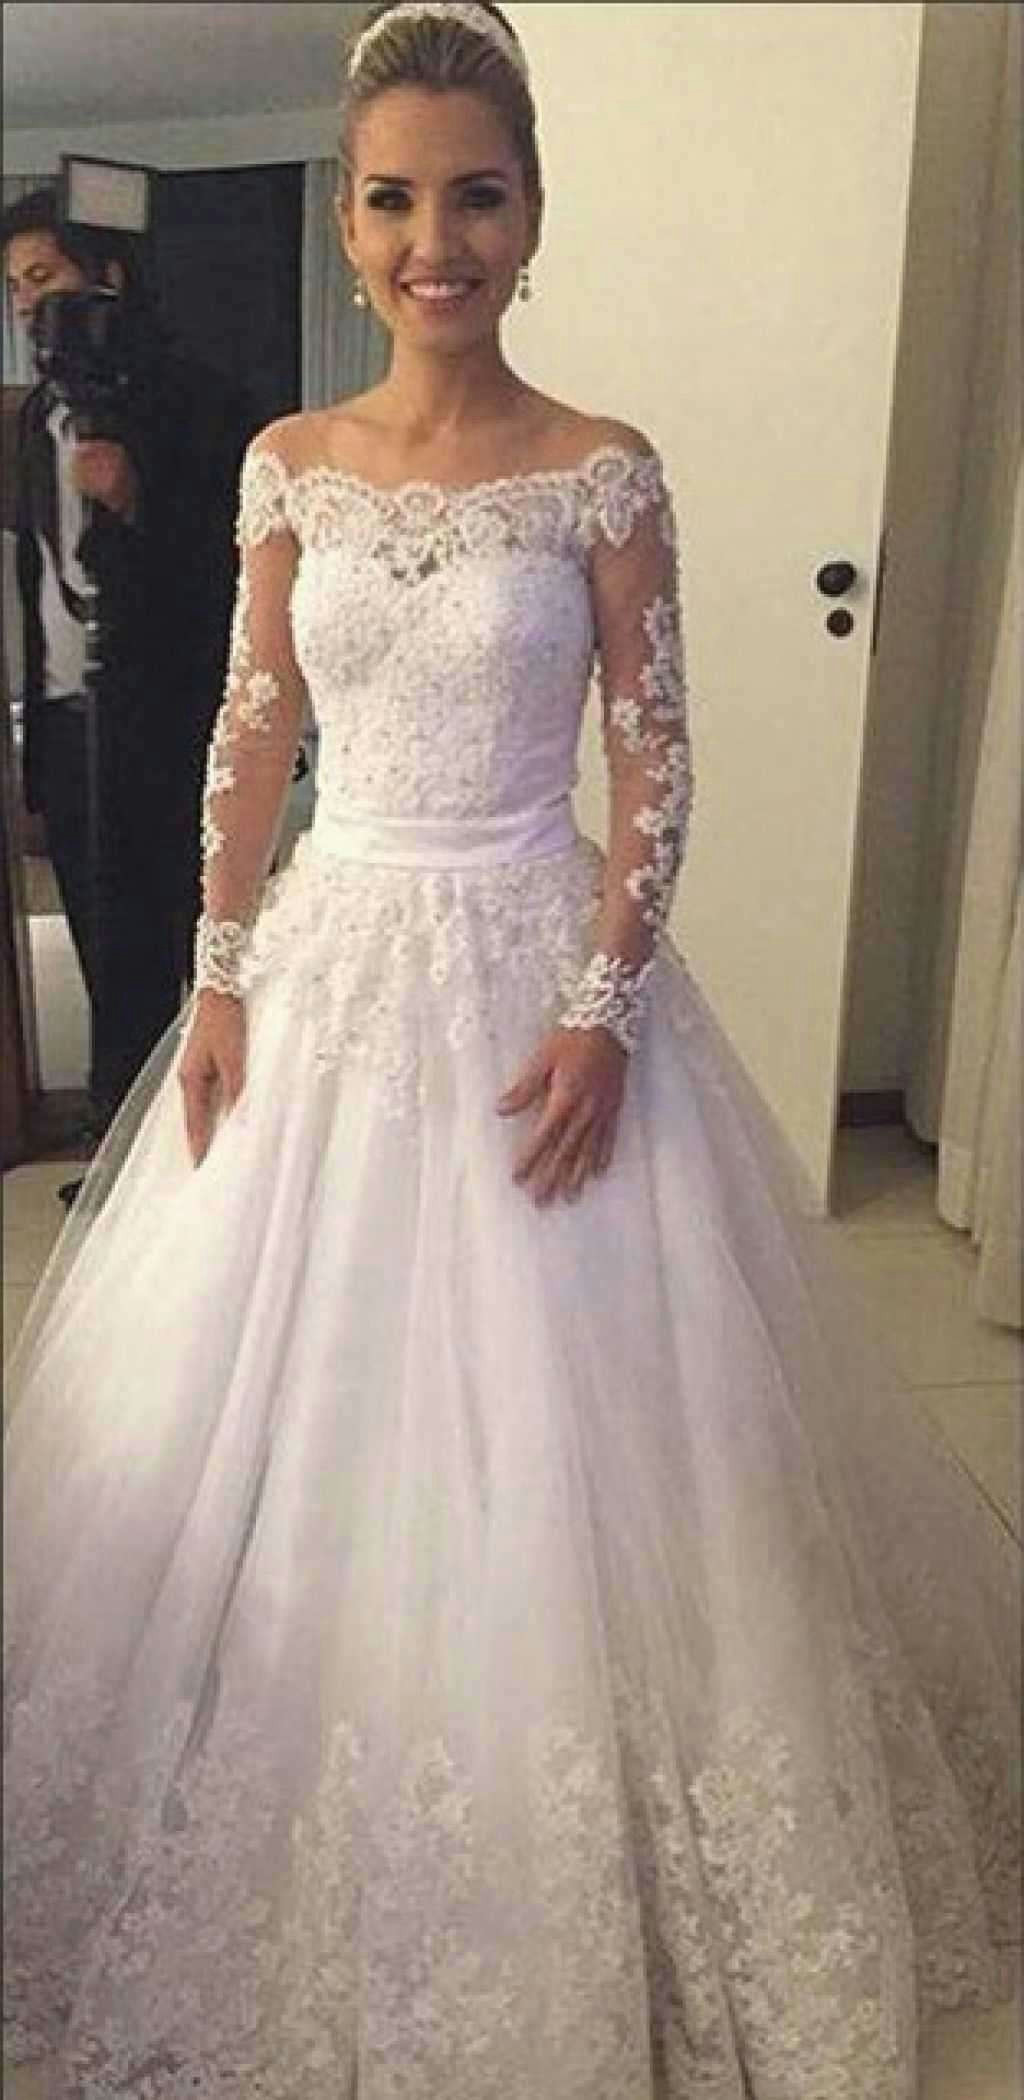 Drawing Of Girl In Wedding Dress Illusion Wedding Dress Restaurantpolidor Info